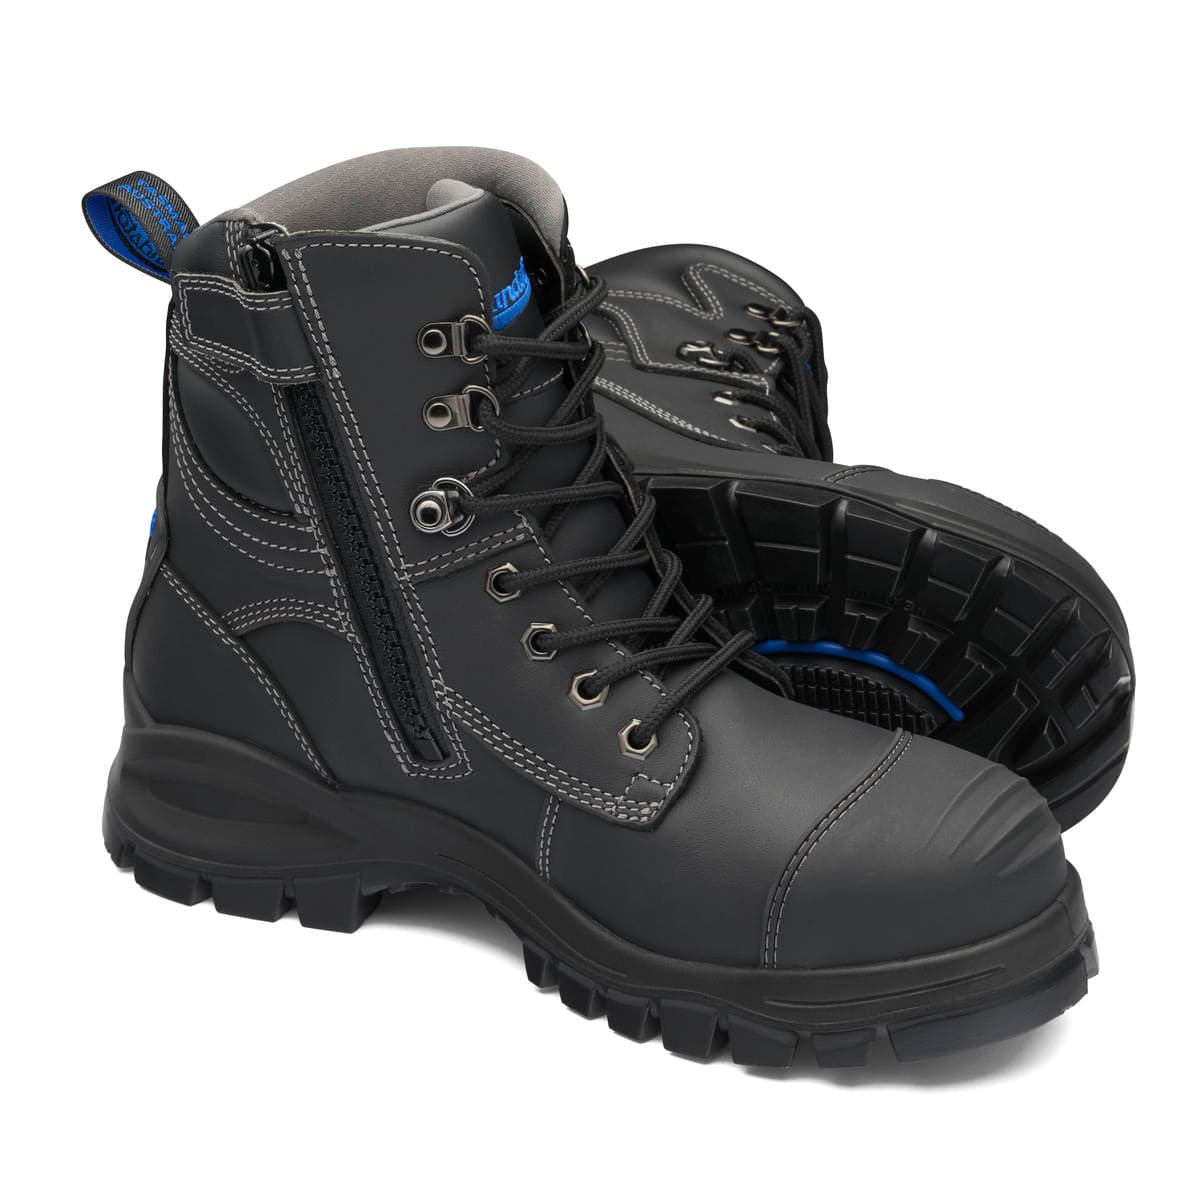 Blundstone Unisex Zip Up Series Safety Boots - Black #997